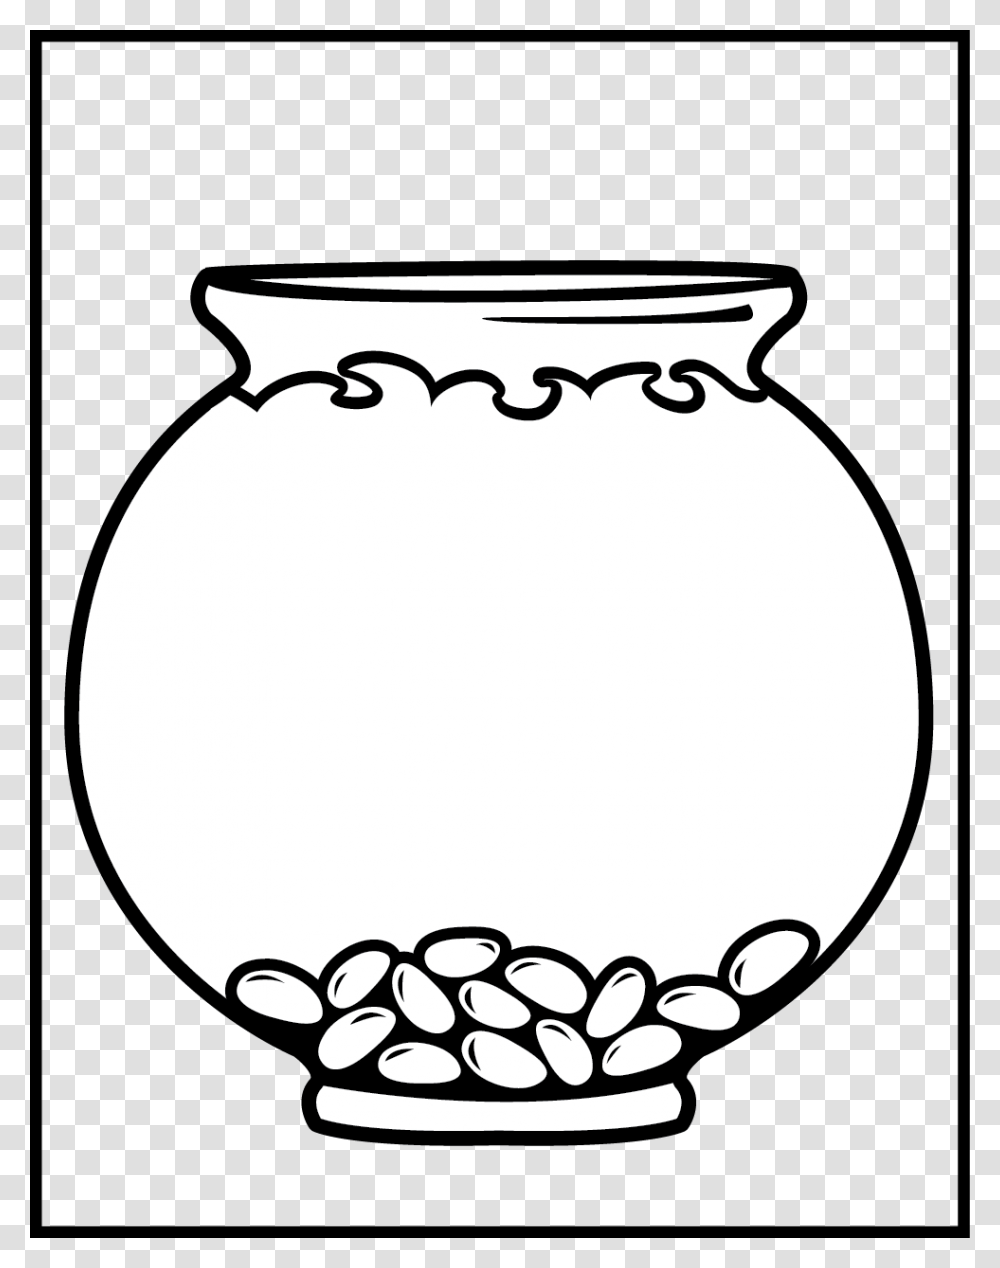 Empty Fish Tank Clipart Black And White Clip Art Images, Jar, Vase, Pottery, Urn Transparent Png